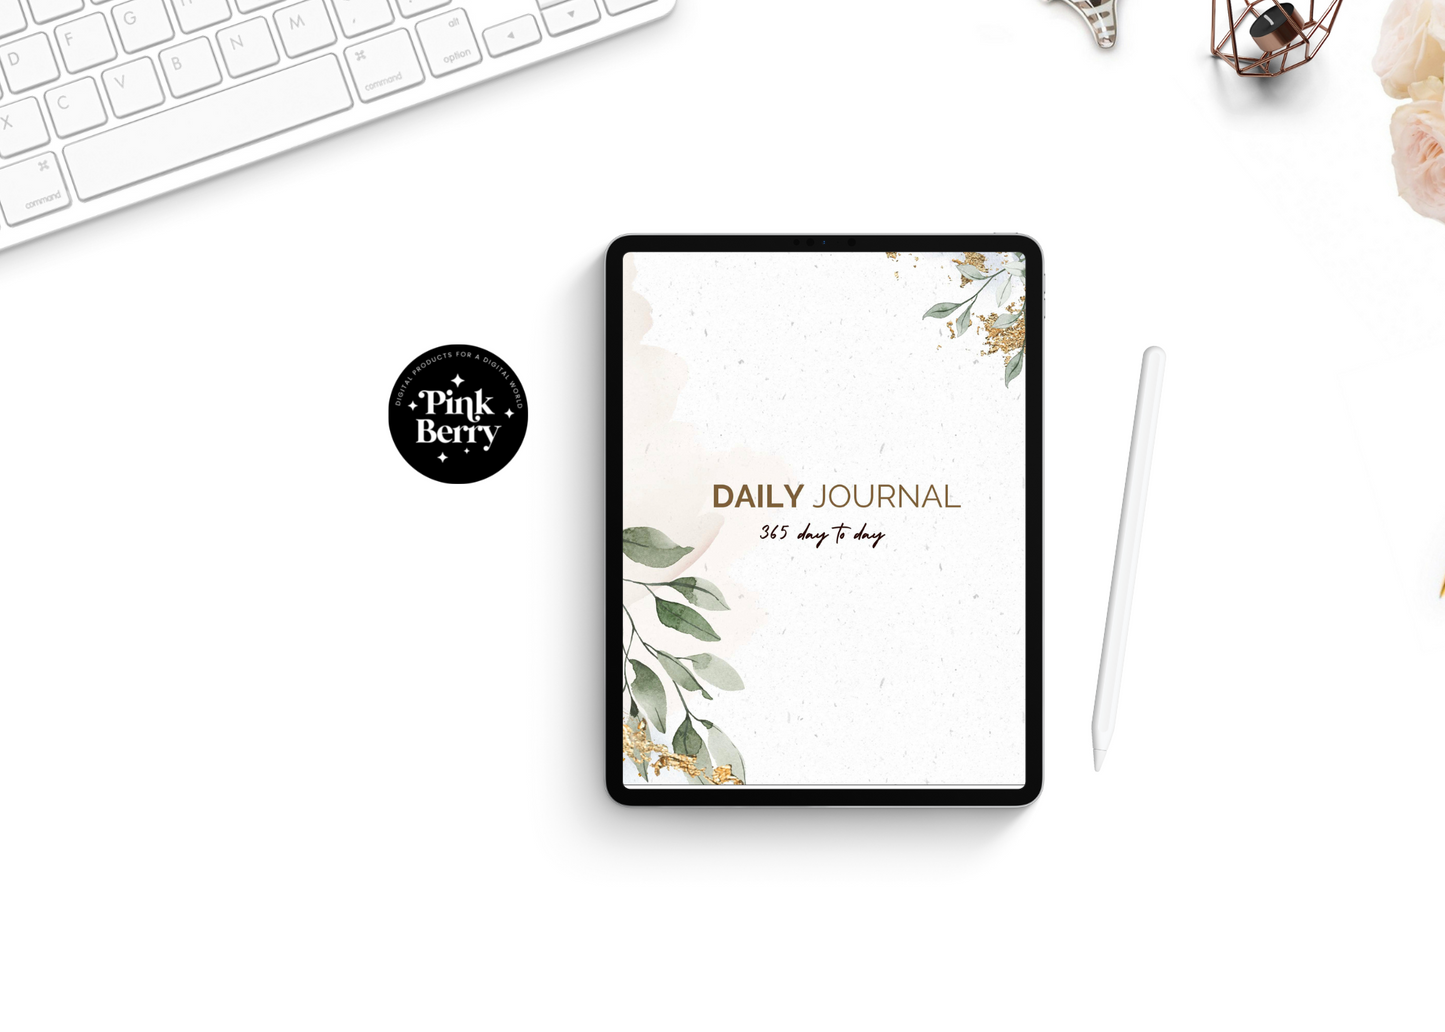 Digital Daily Journal | GoodNotes Journal | iPad Journals | Digital Diary